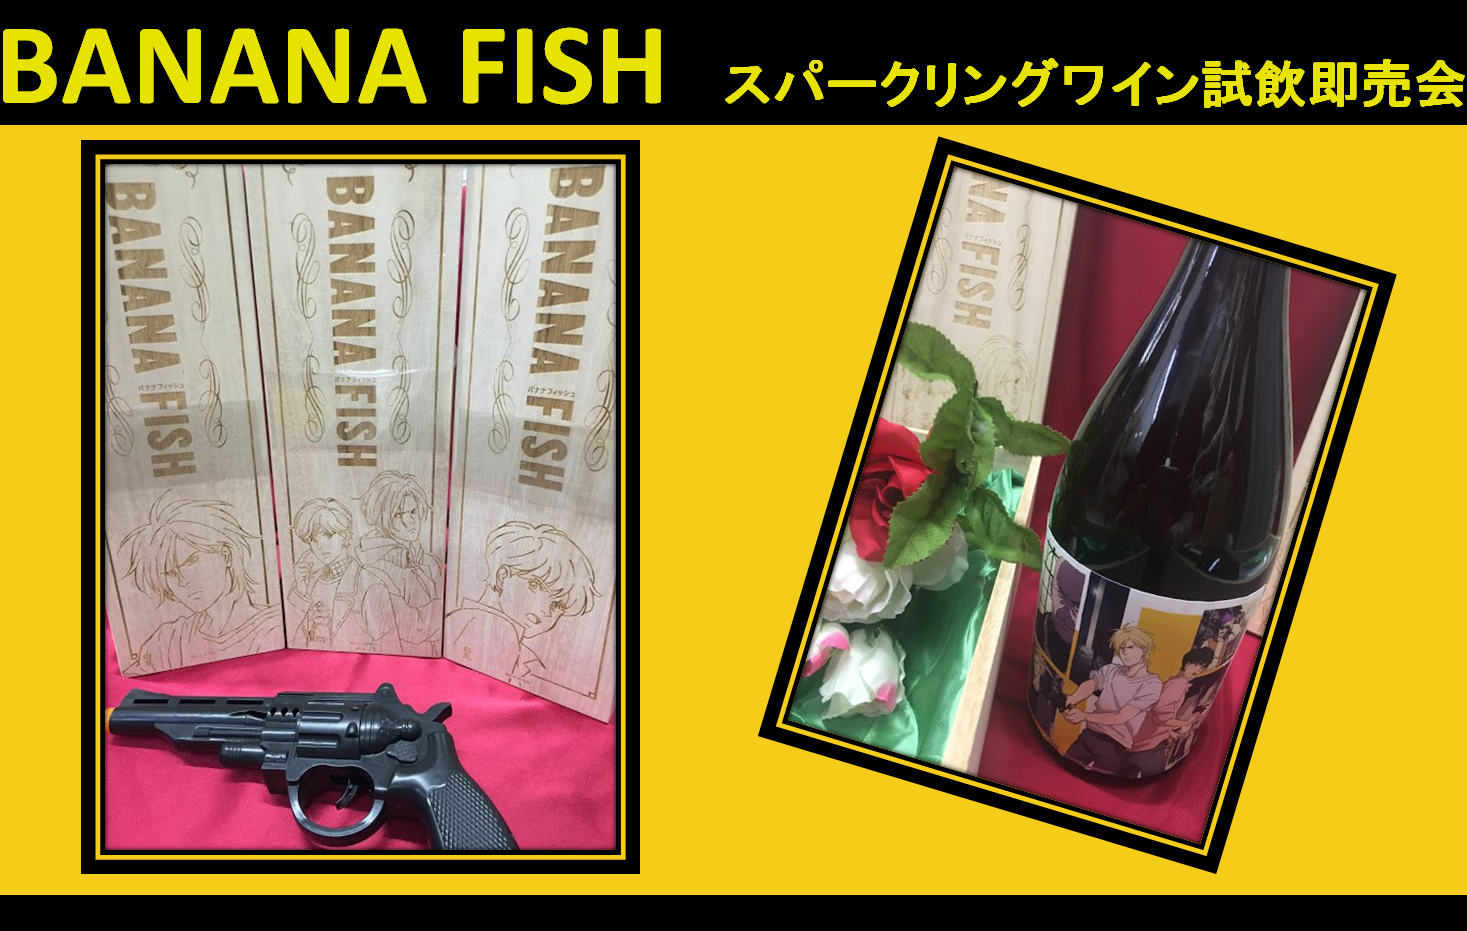 BANANA FISH スパークリングワイン試飲即売会 開催!!!】 - アニメイト町田